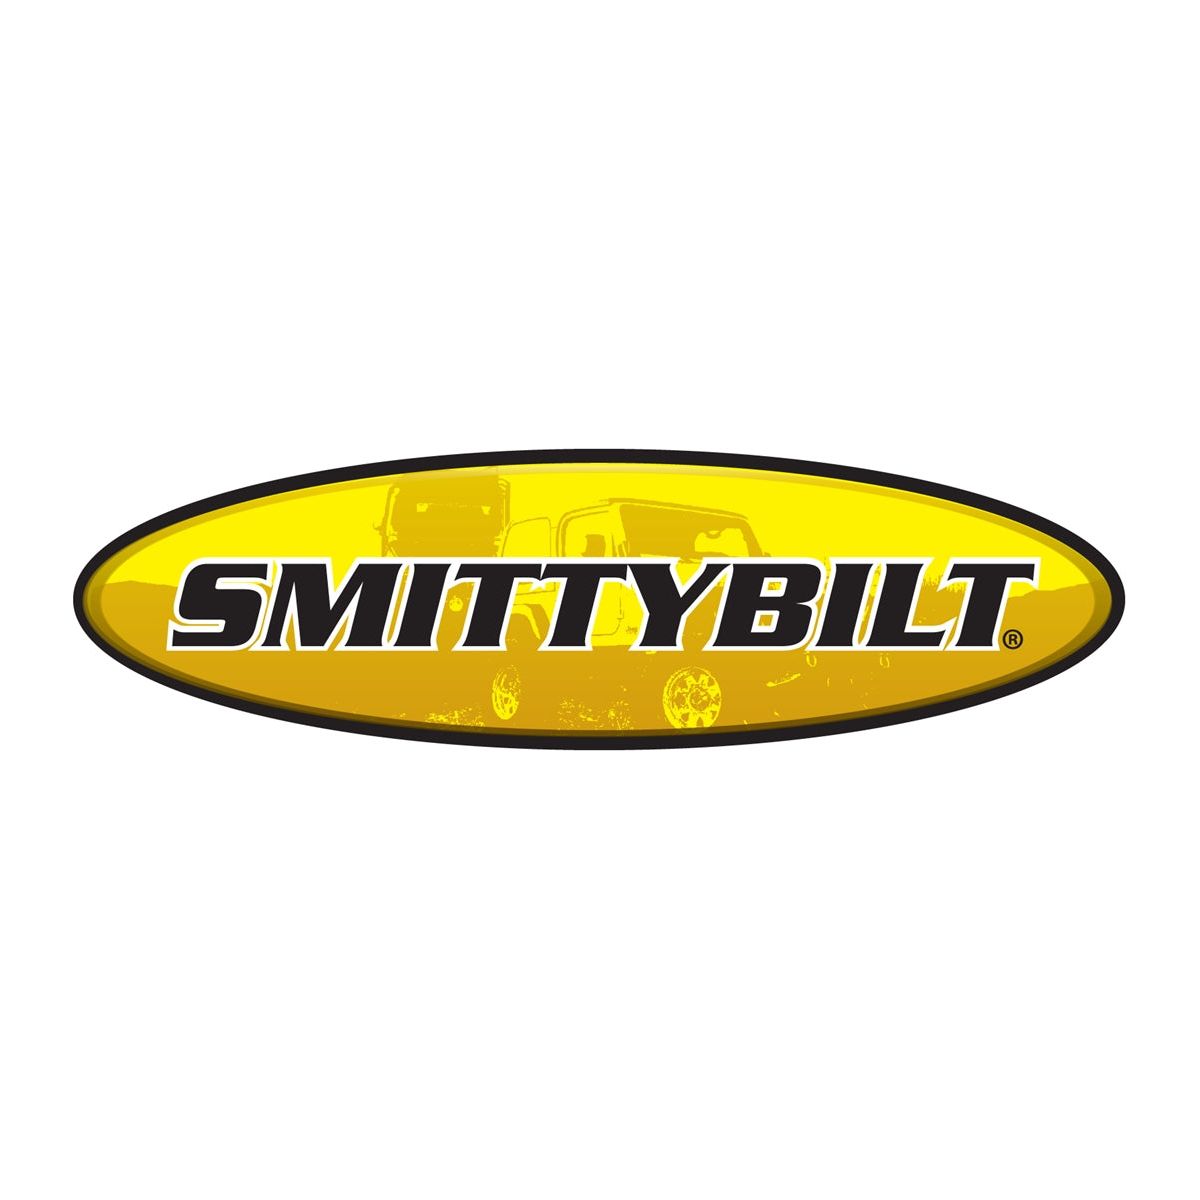 Smittybilt XRC 9.5 Gen2 Waterproof Winch Rated For 9,500lbs.